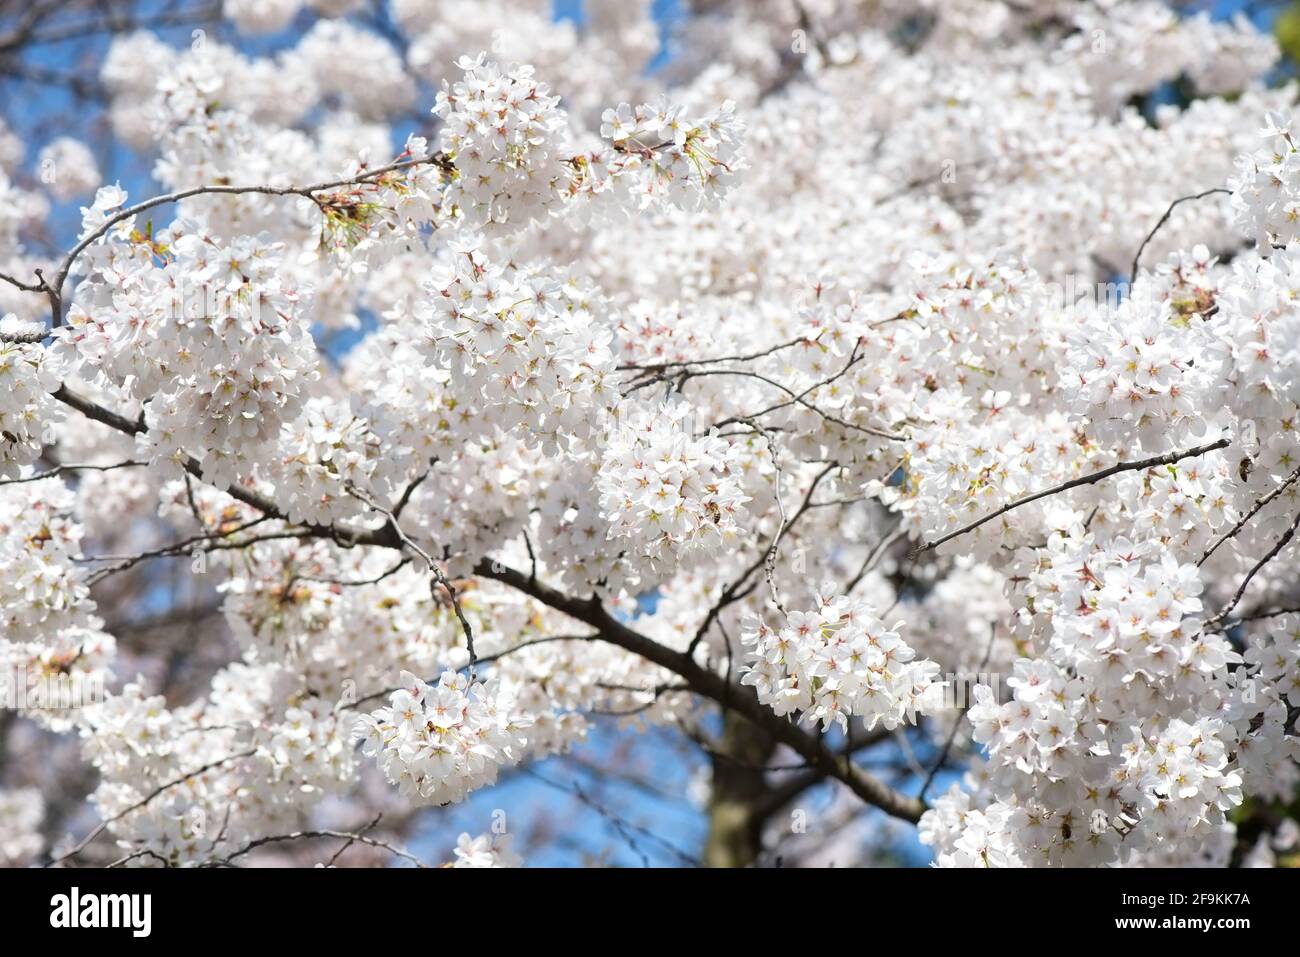 White Cherry plum tree in bloom, detail Stock Photo